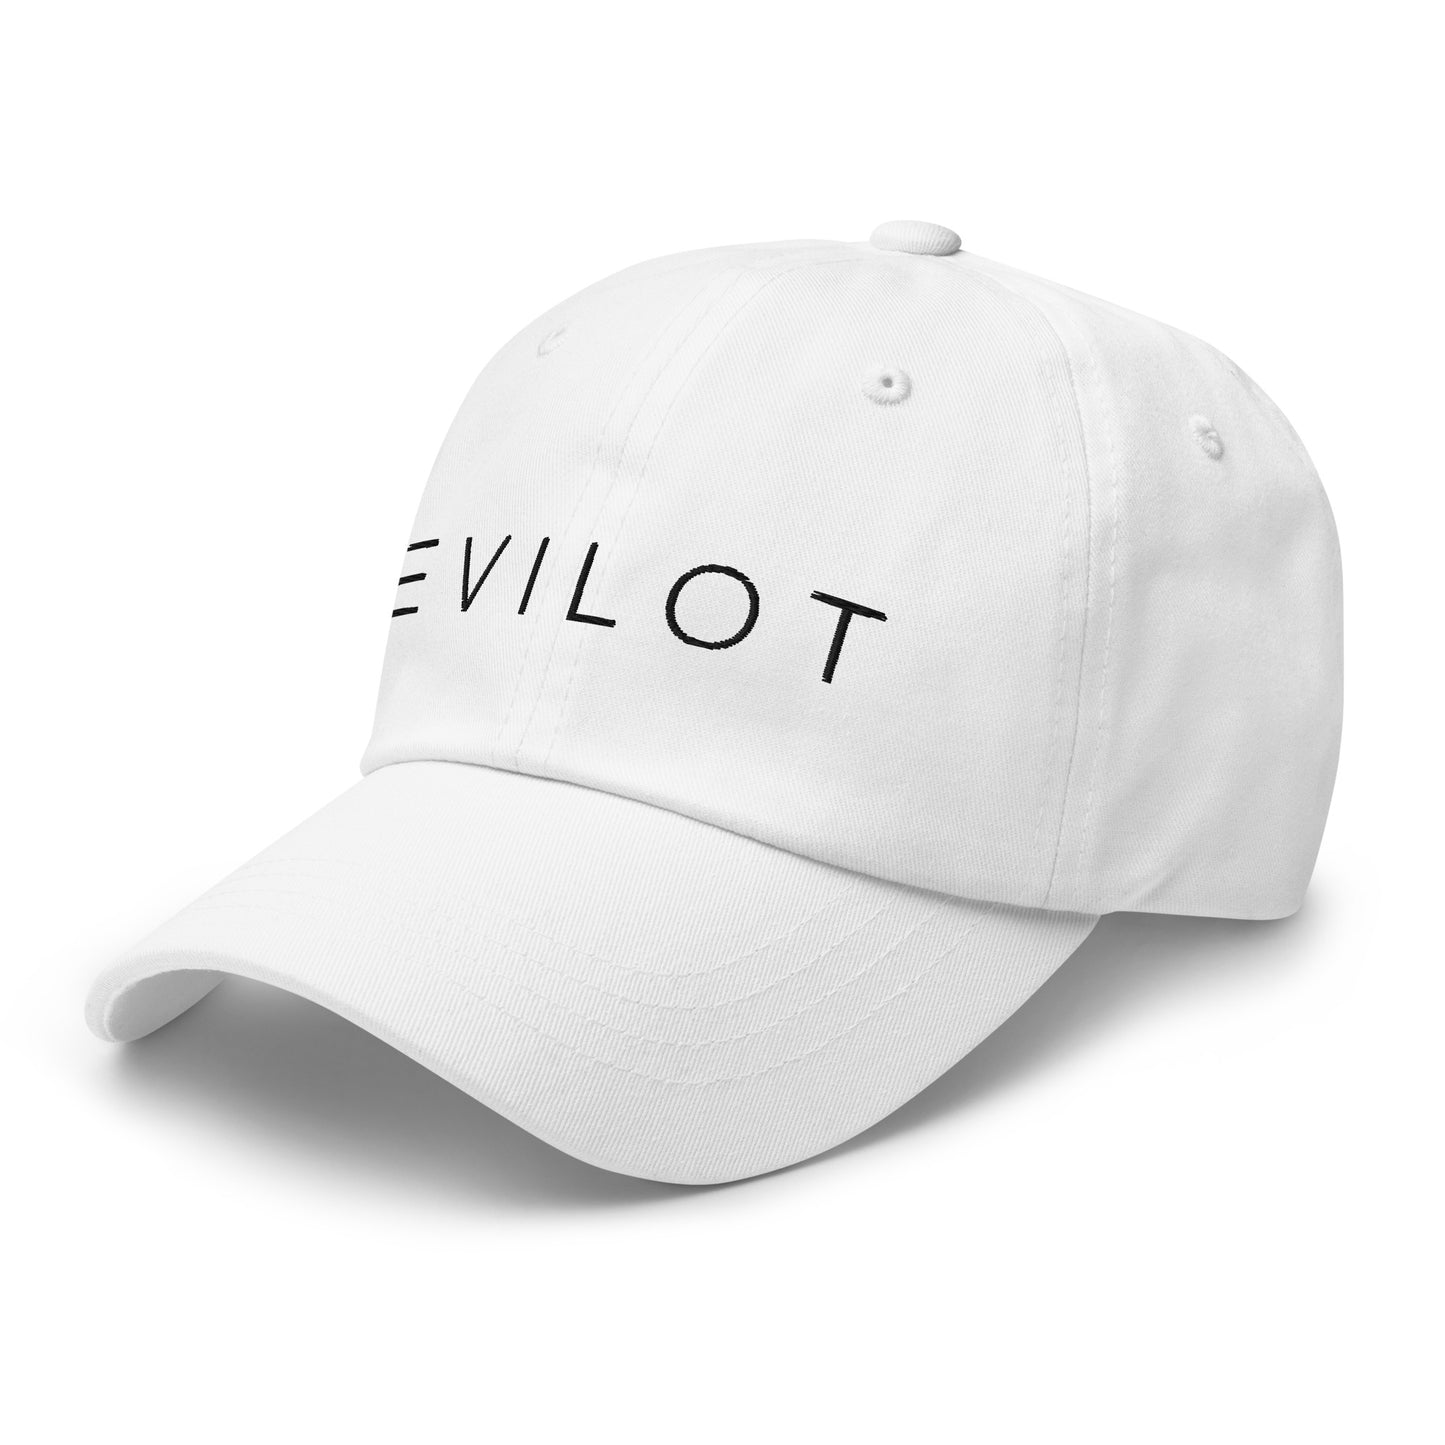 TOLIVE Hat - White